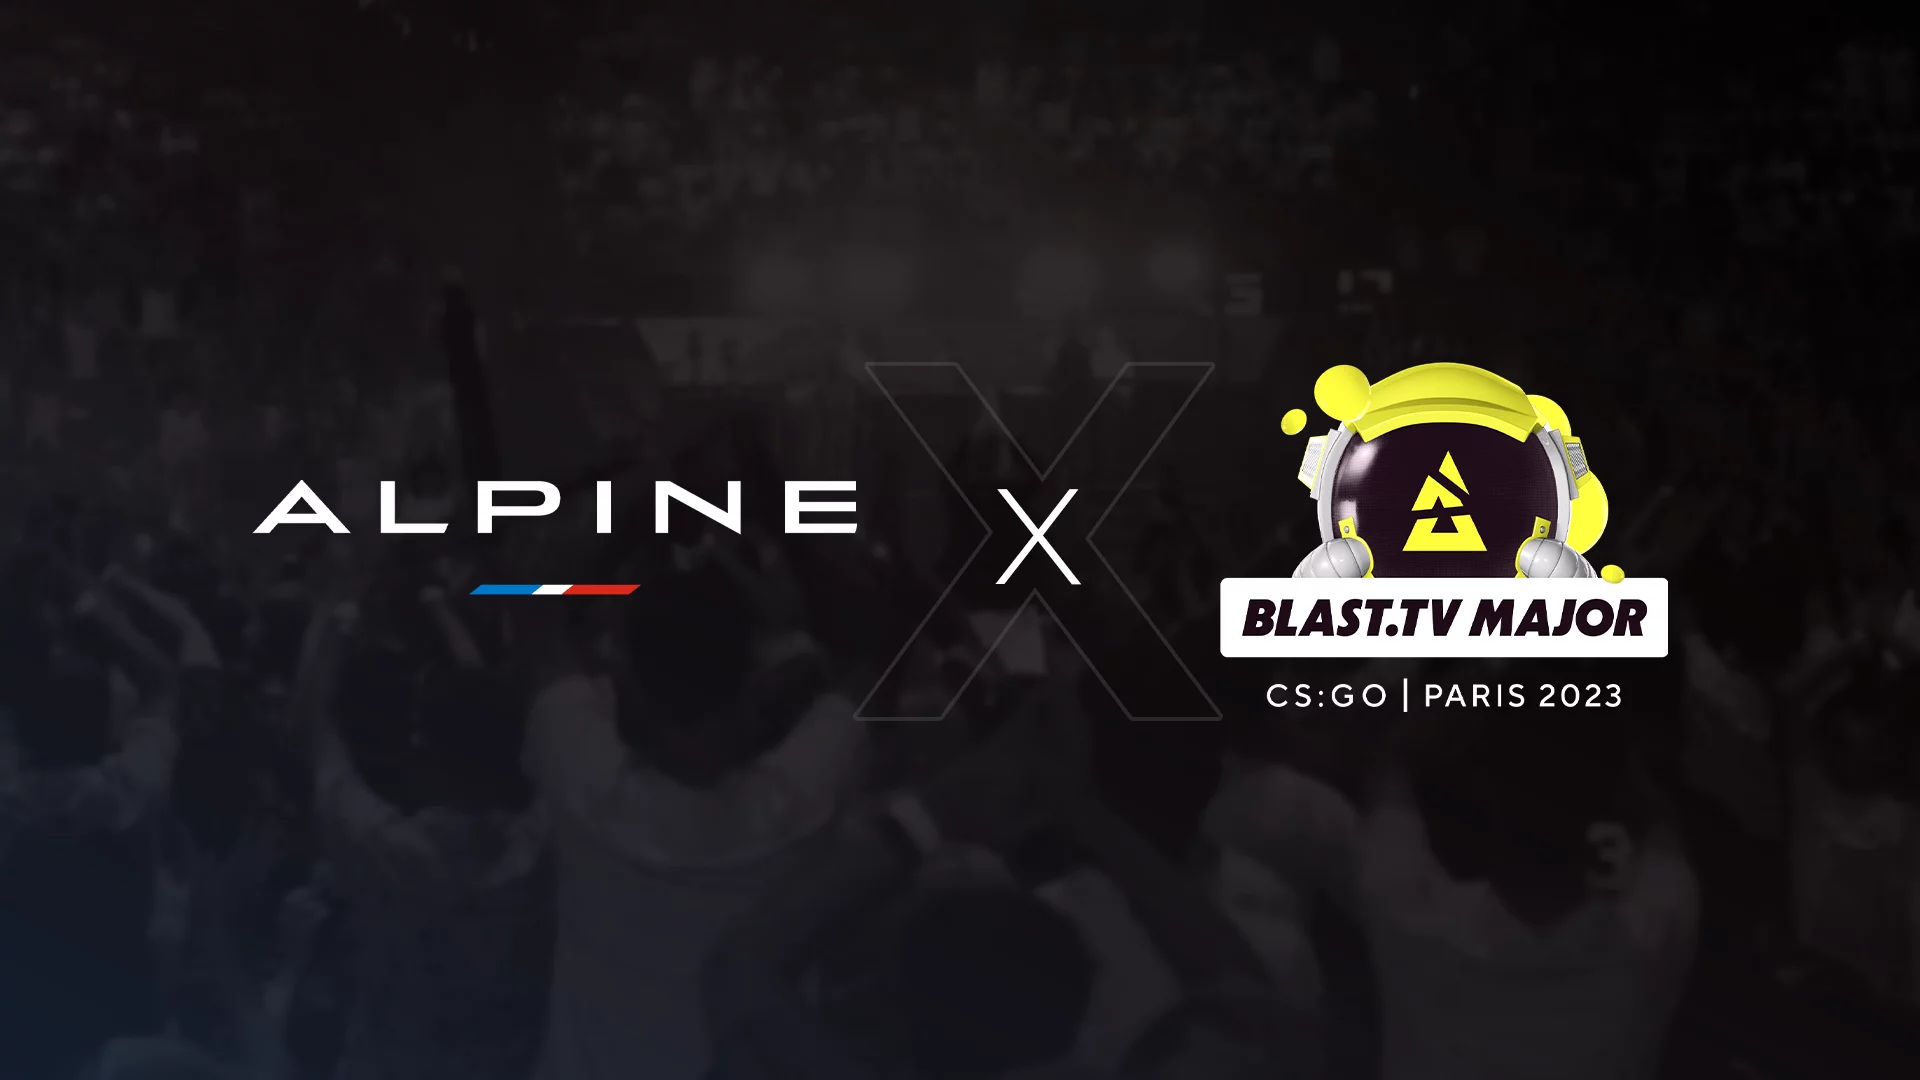 Alpine announces ultimate crossover partnership with the BLAST Paris Major